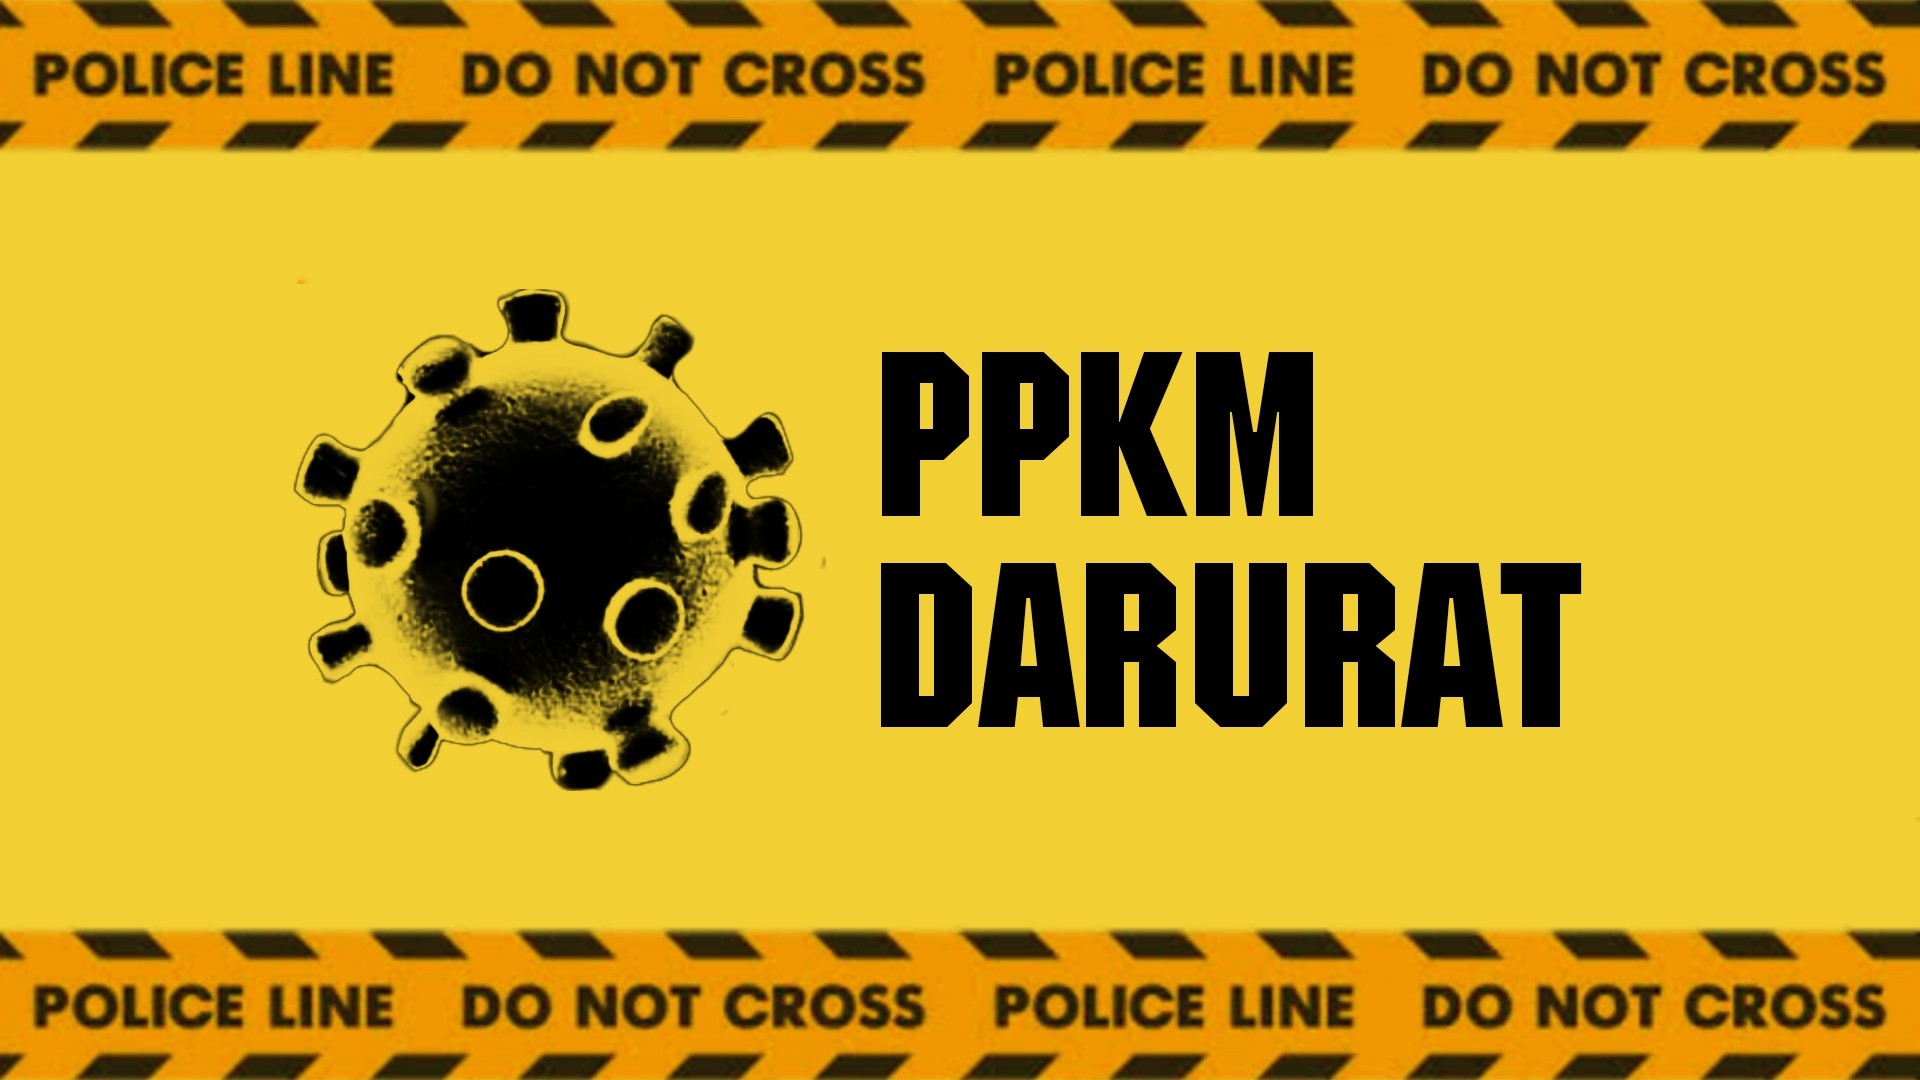 Daerah ppkm level 4